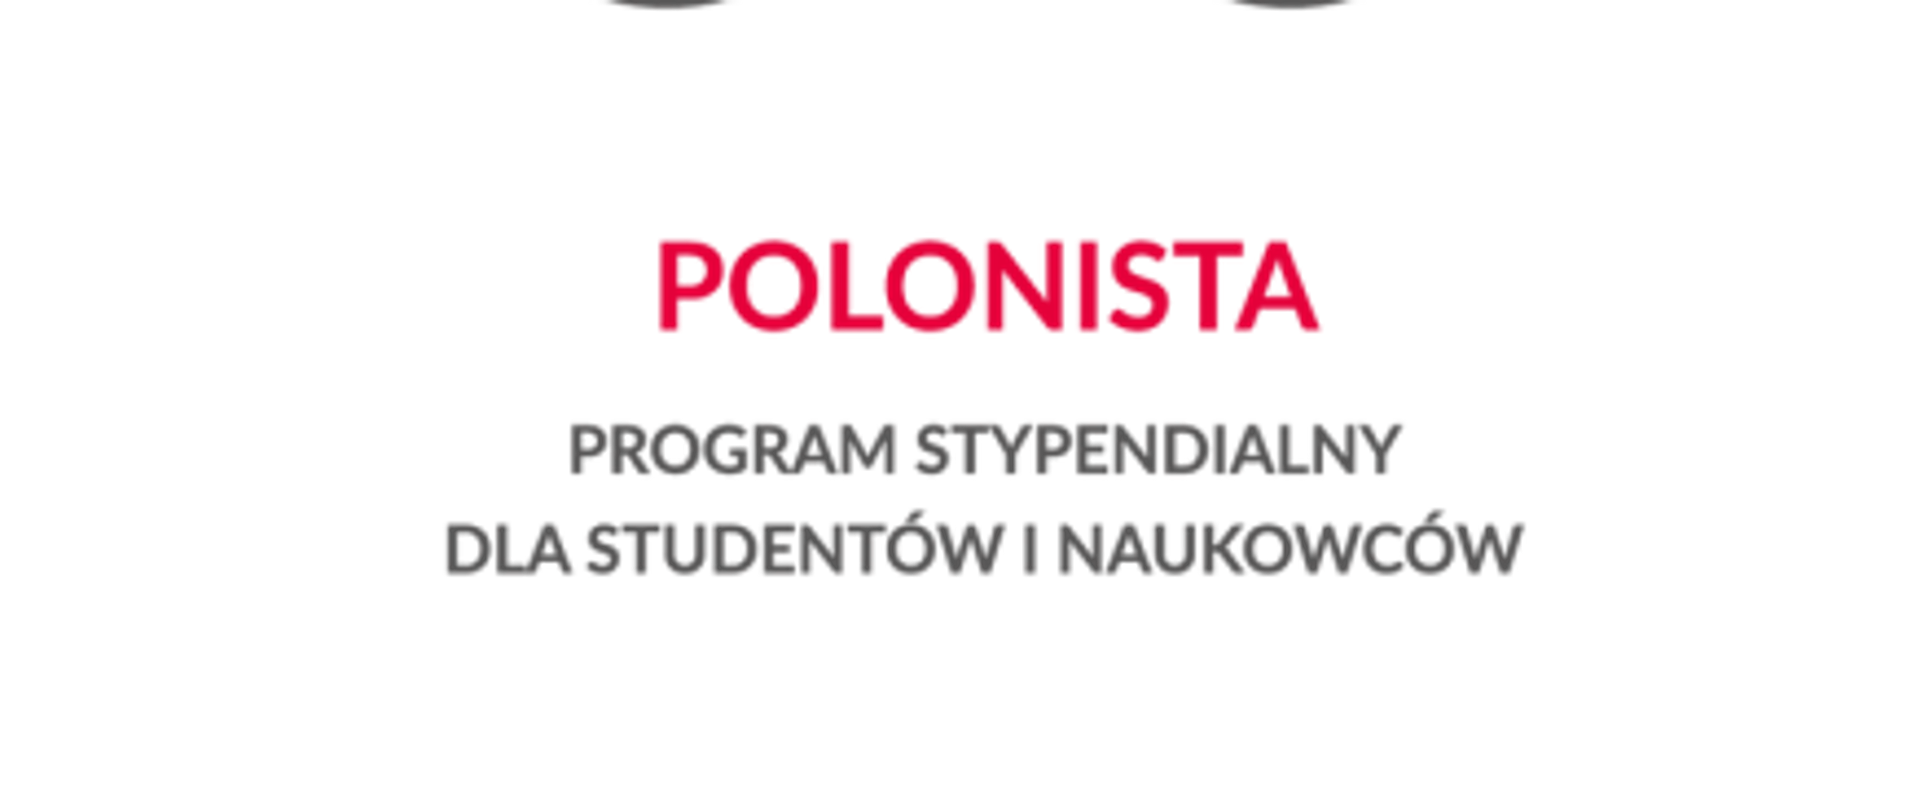 Program stypendialny Polonista